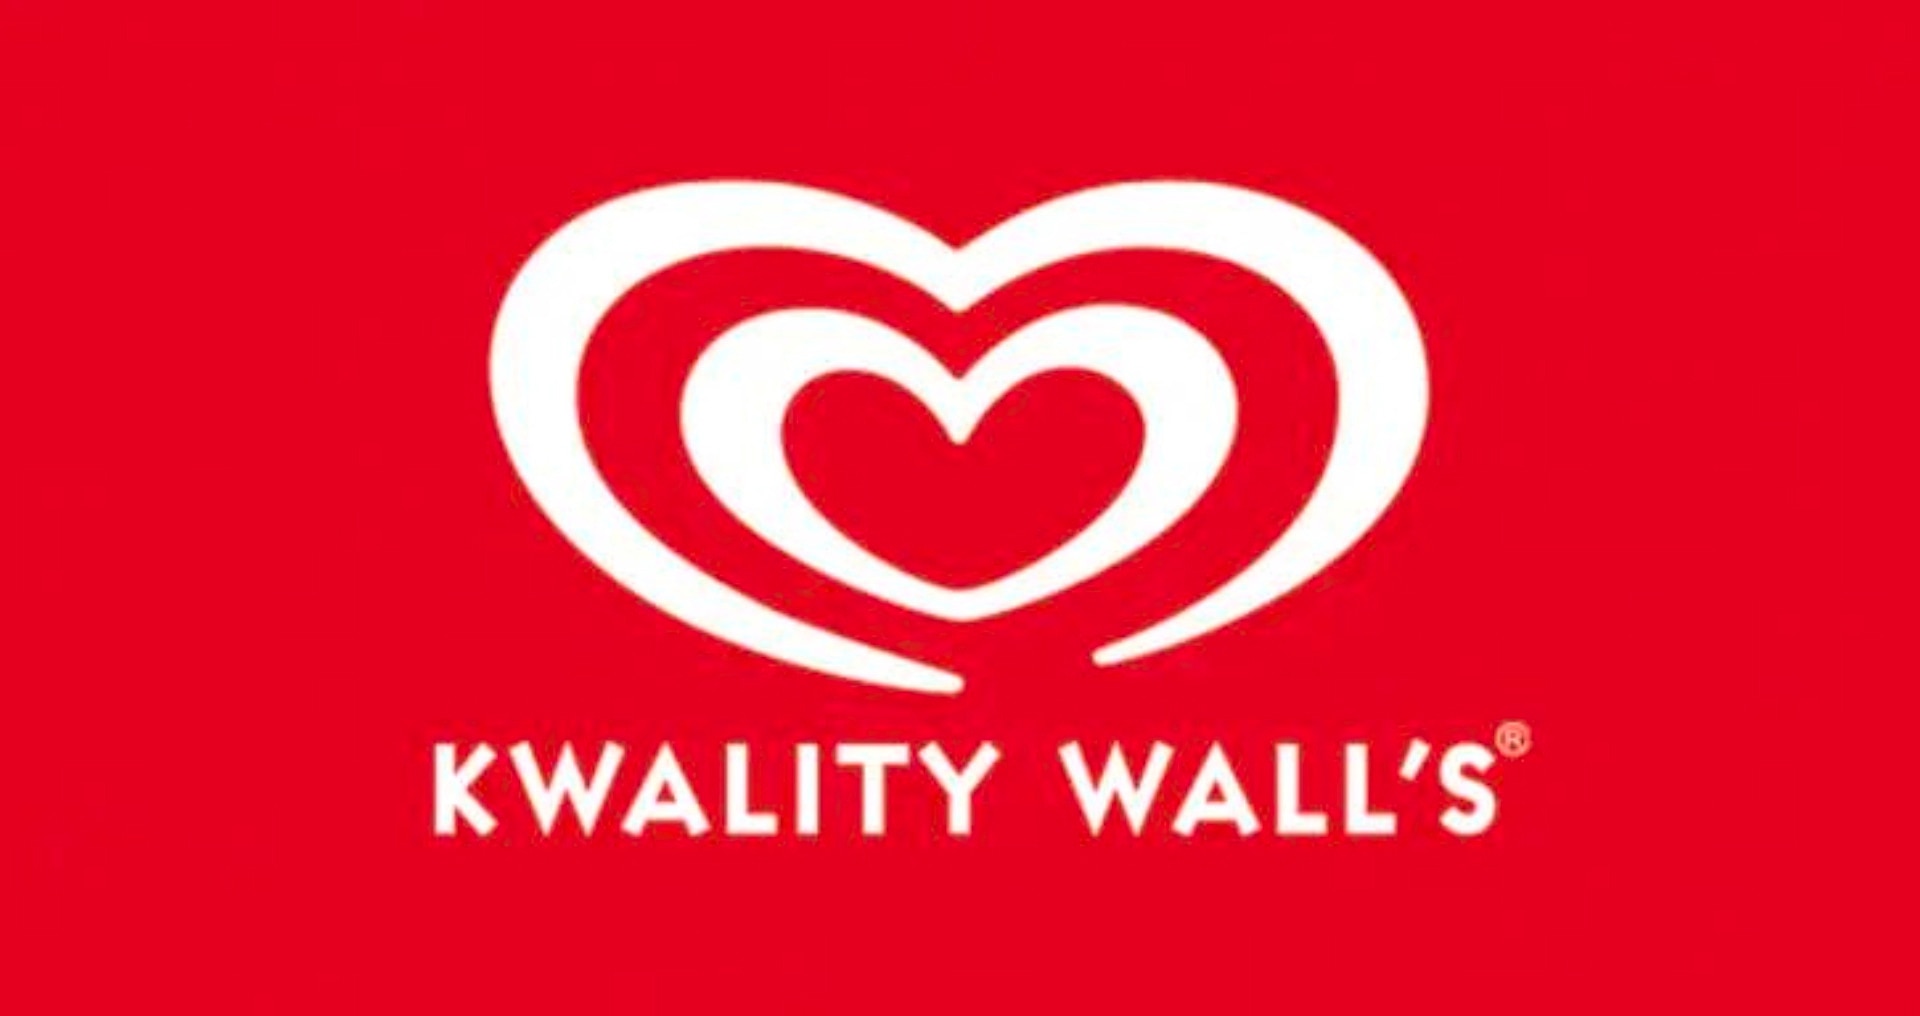 Kwality Wall's